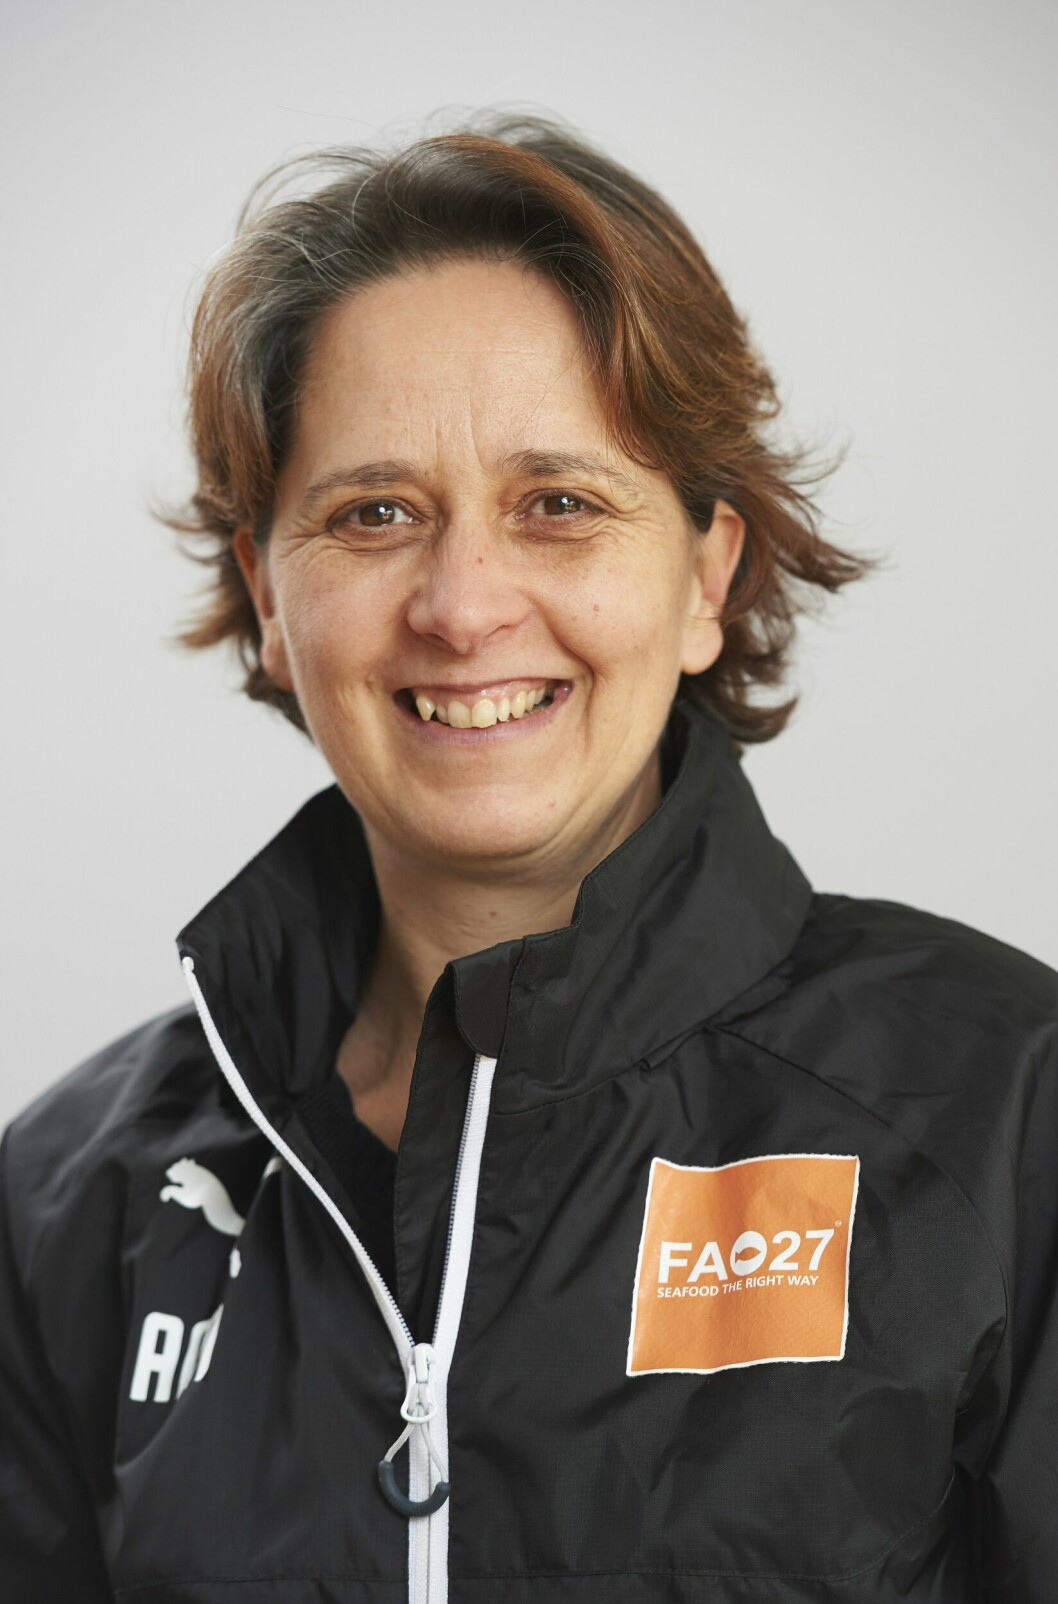 Anne Moseley, MD of FA027 Ltd